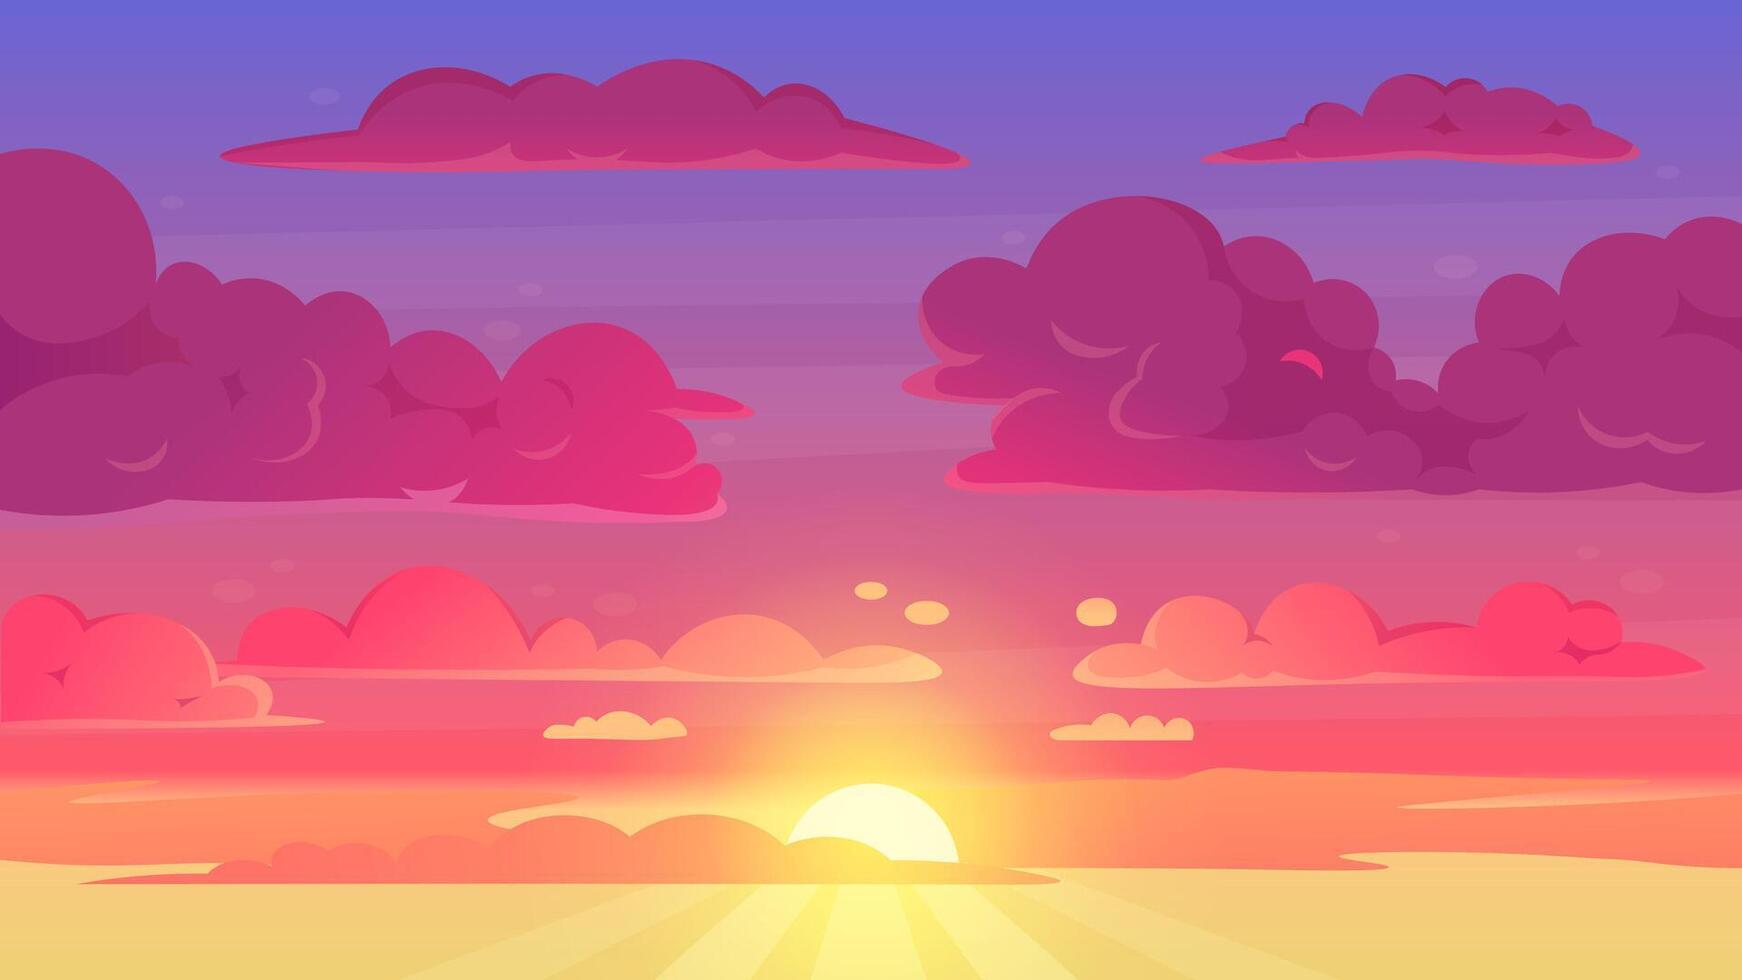 tekenfilm zonsondergang lucht. helling paars en geel lucht wolken landschap, avond zonsondergang hemel panorama vector achtergrond illustratie